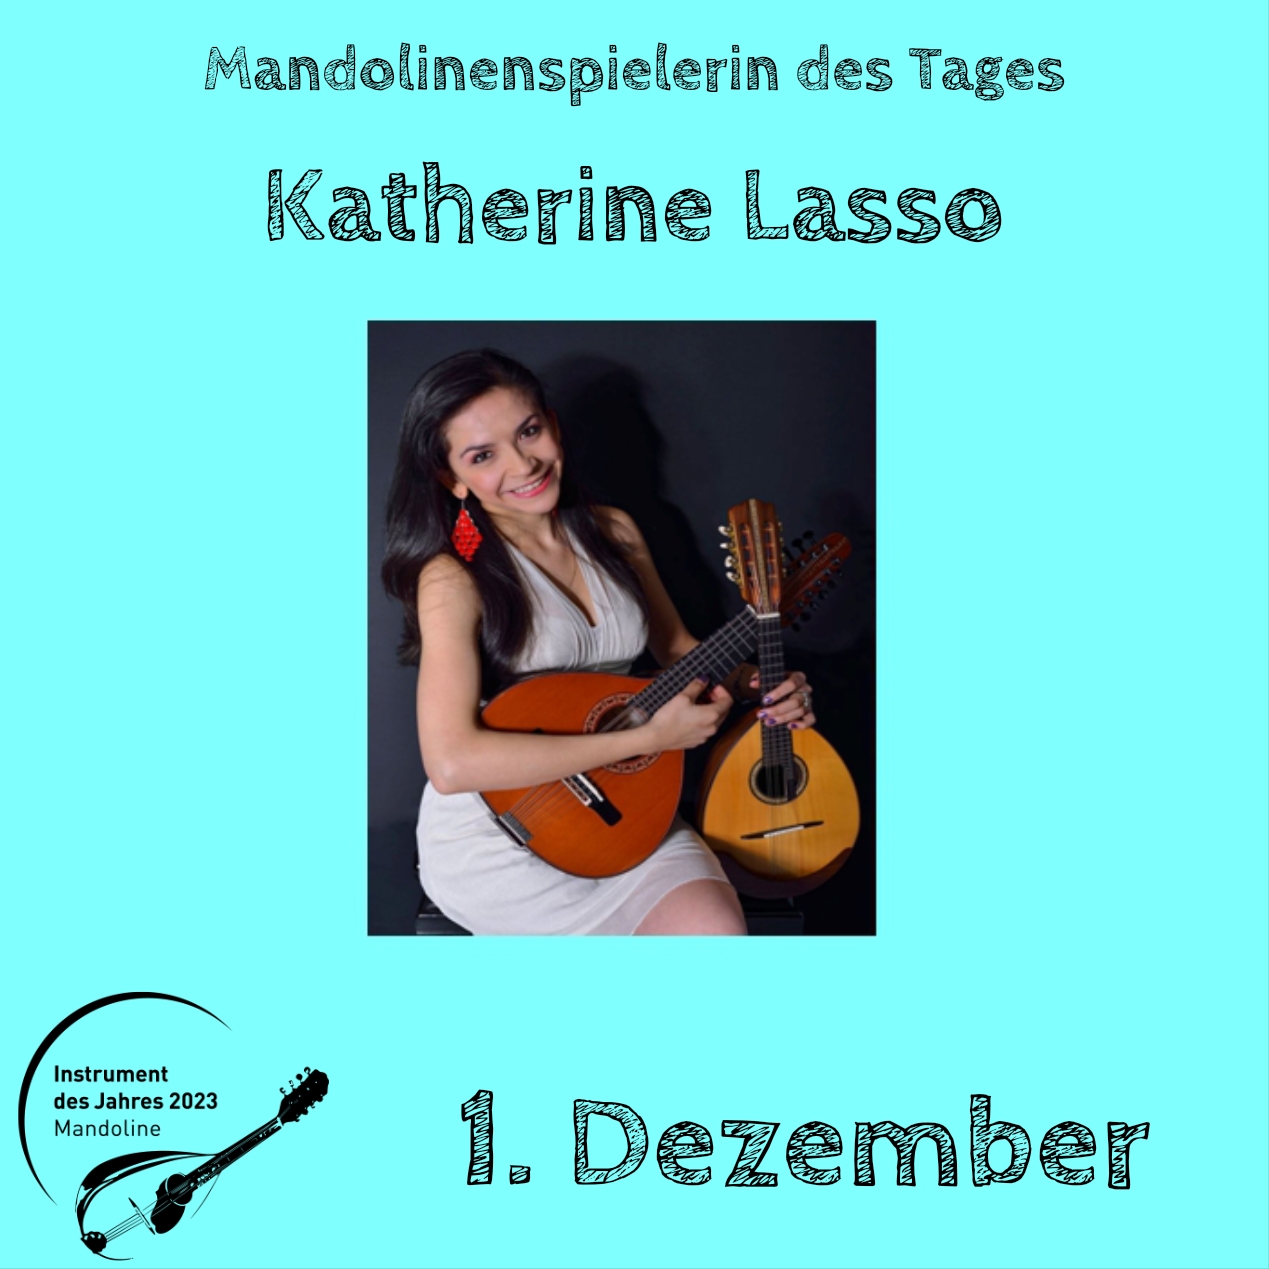 1. Dezember - Katherine Lasso Instrument des Jahres 2023 Mandolinenspieler Mandolinenspielerin des Tages